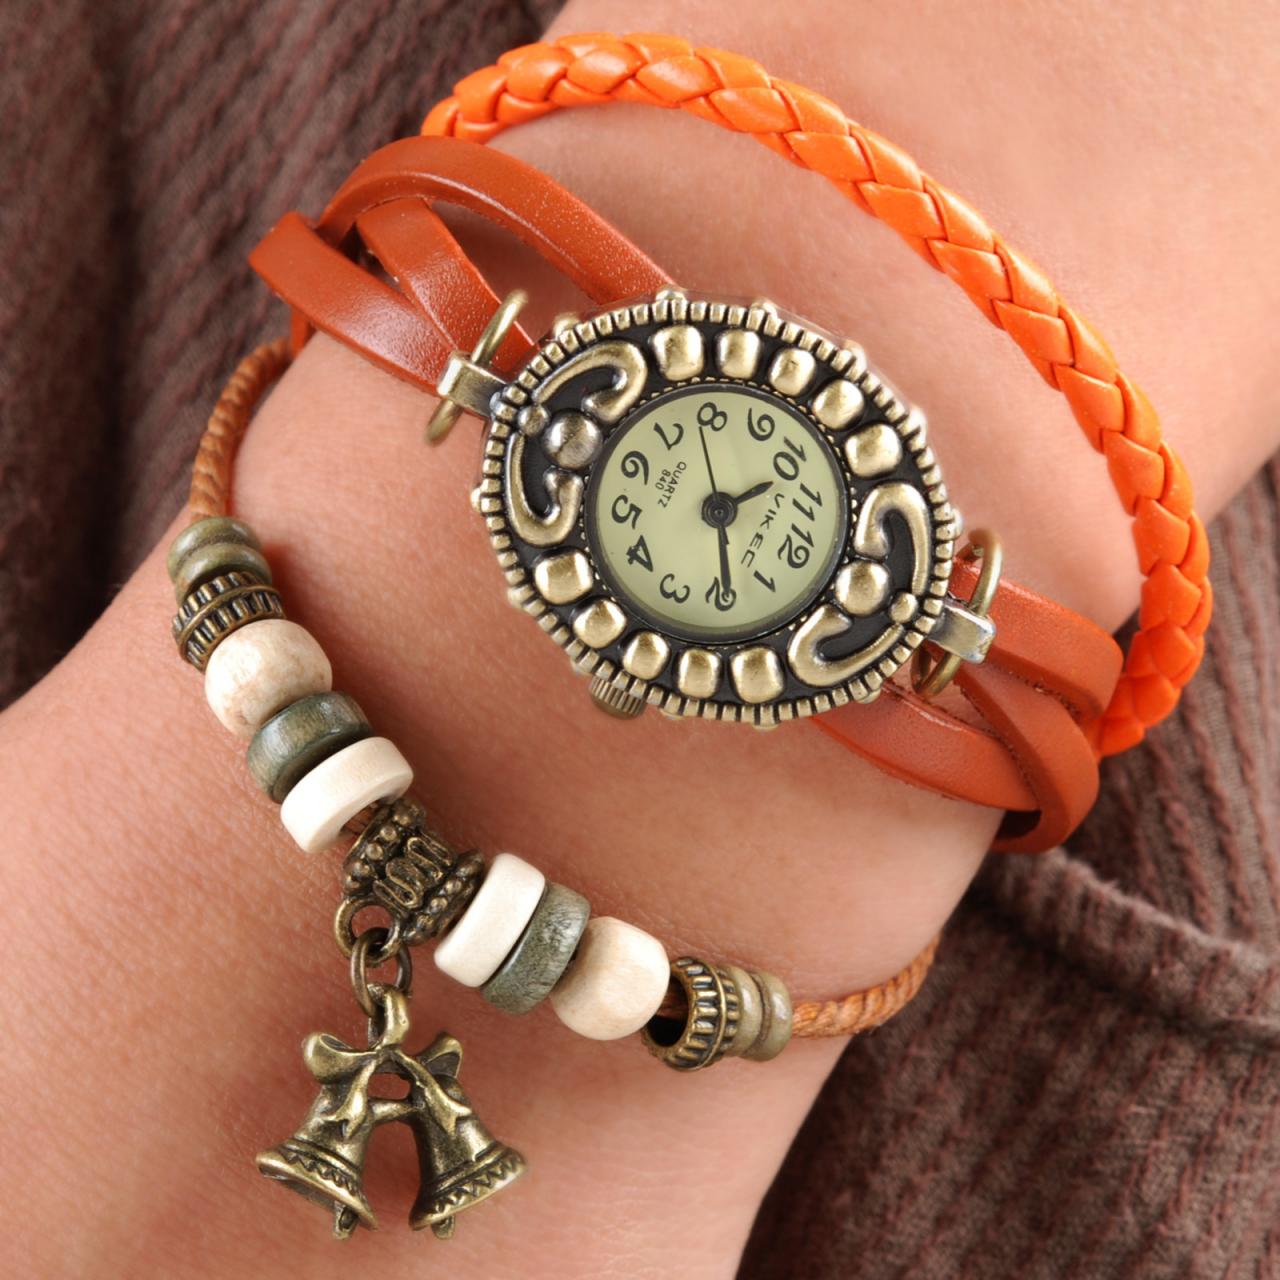 Handmade Vintage Quartz Weave Around Leather Bracelet Lady Woman Girl Wrist Watch With Bell Charm Light Brown